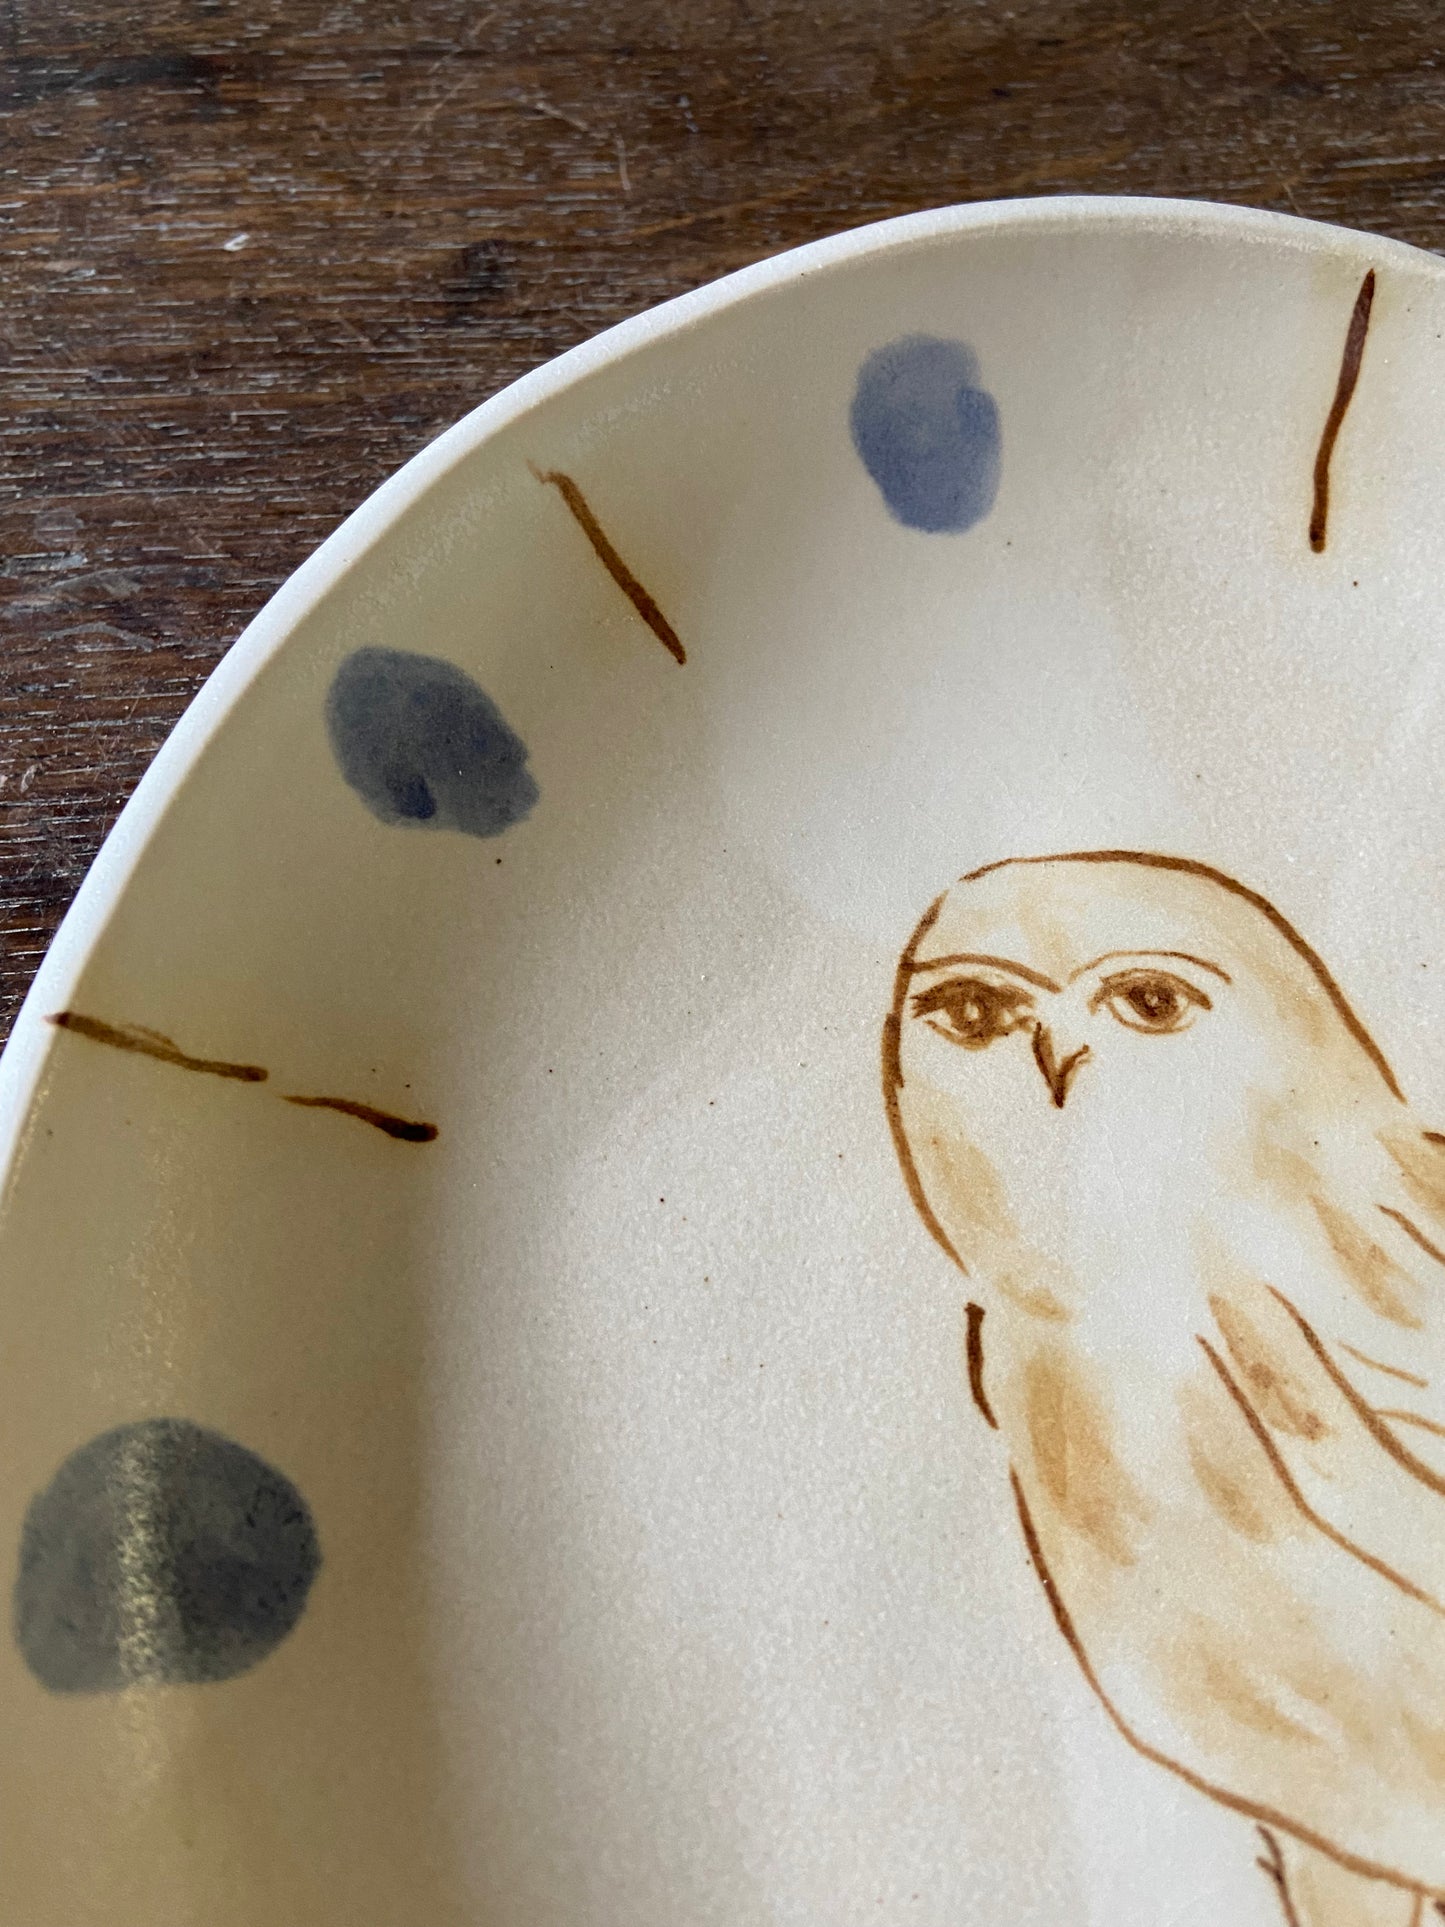 Charlotte Salt - Ceramic Owl Plate